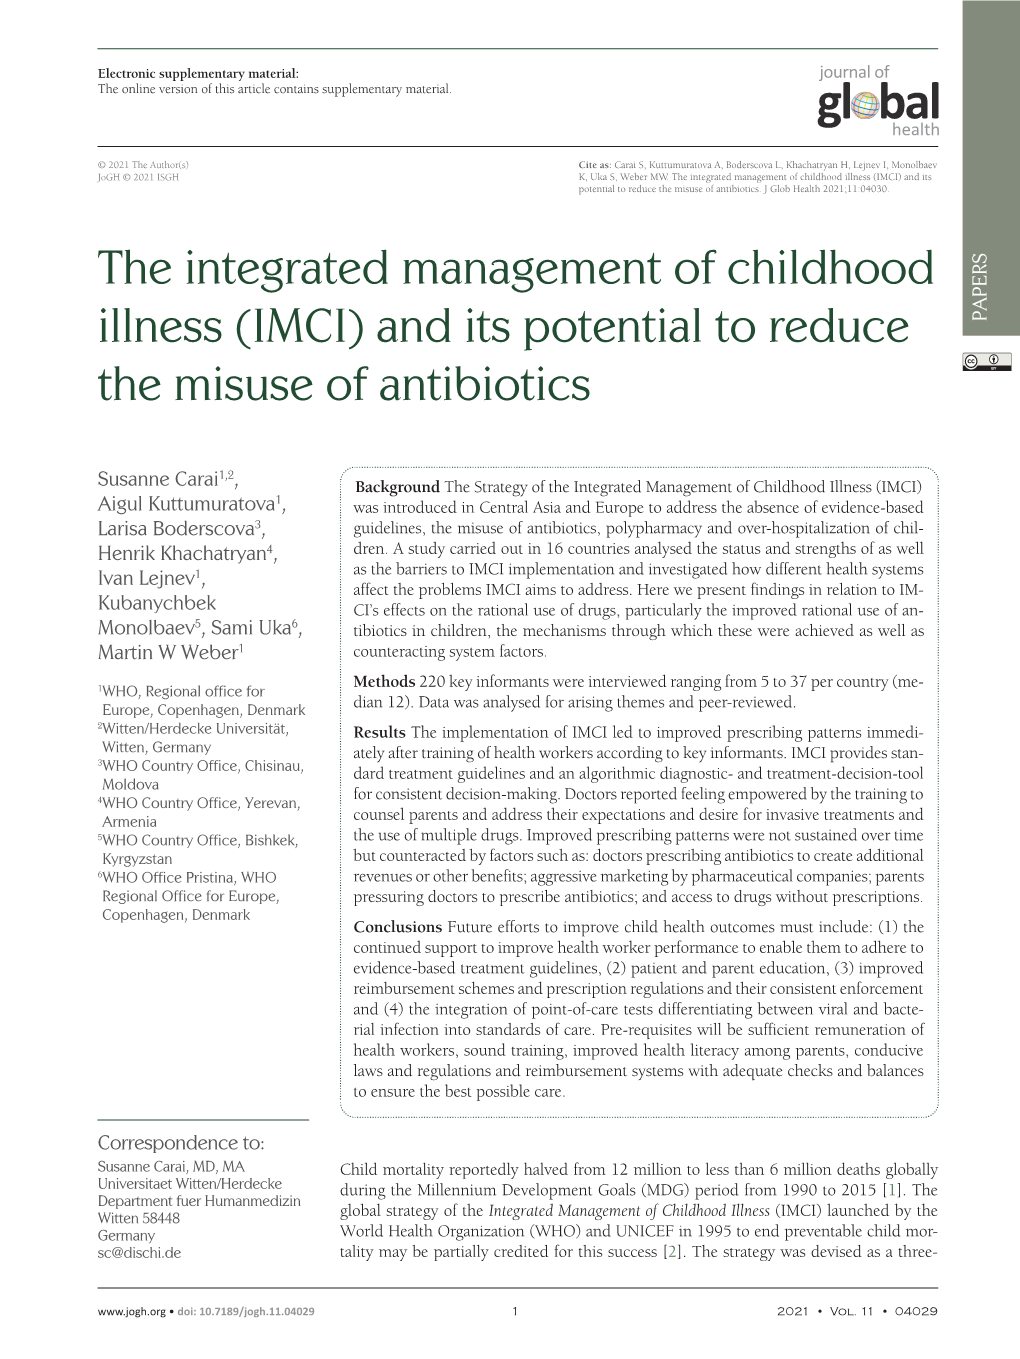 The Integrated Management of Childhood Illness (IMCI)